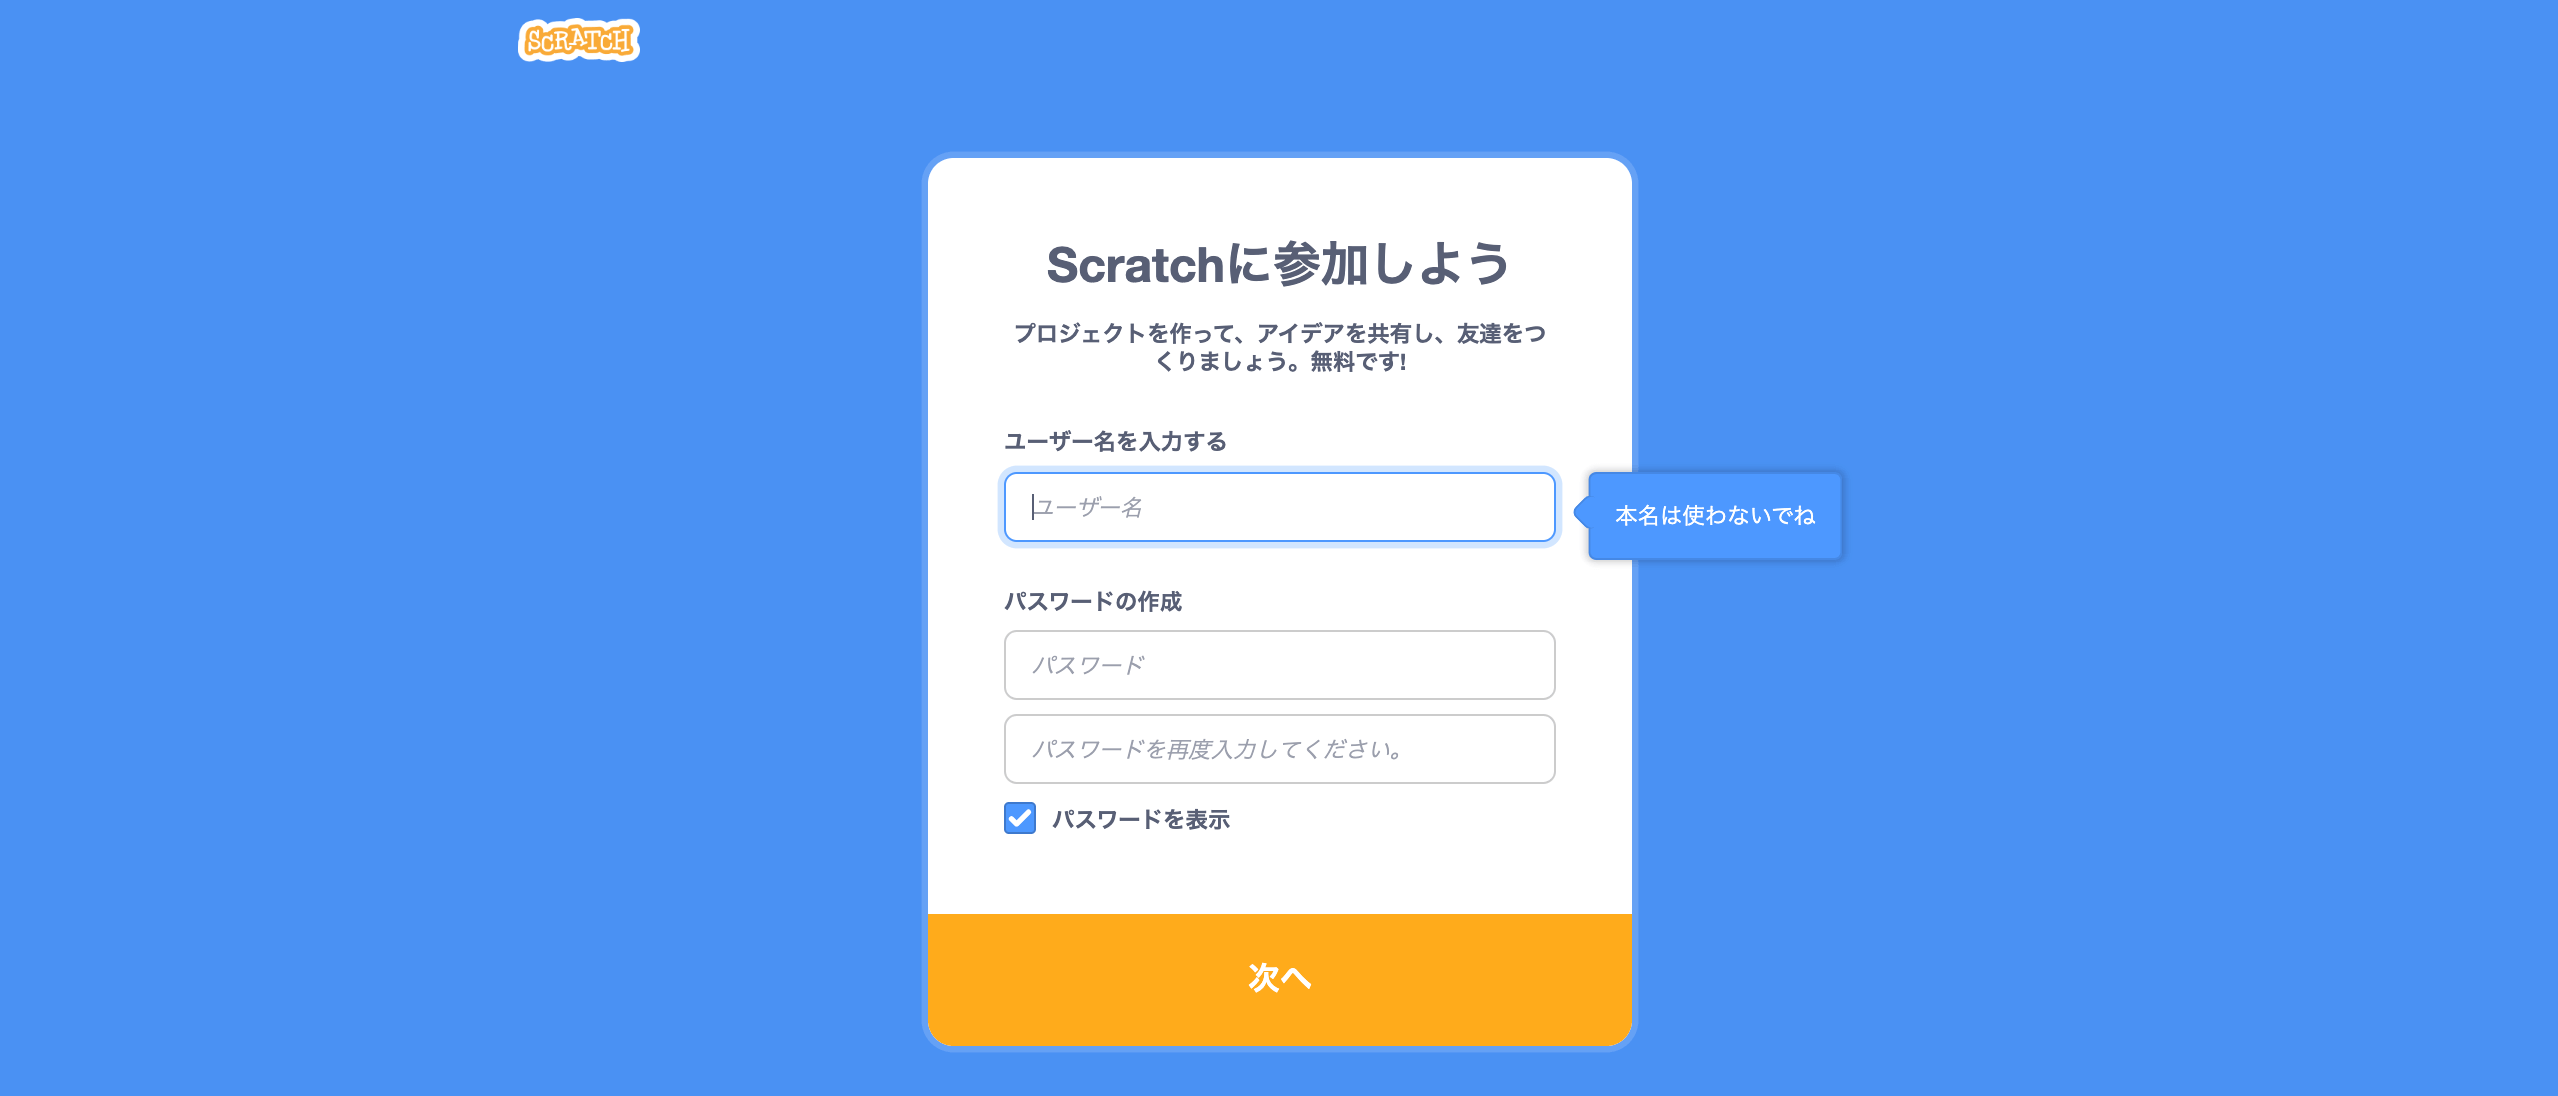 Scratch（スクラッチ）は使い方が簡単!